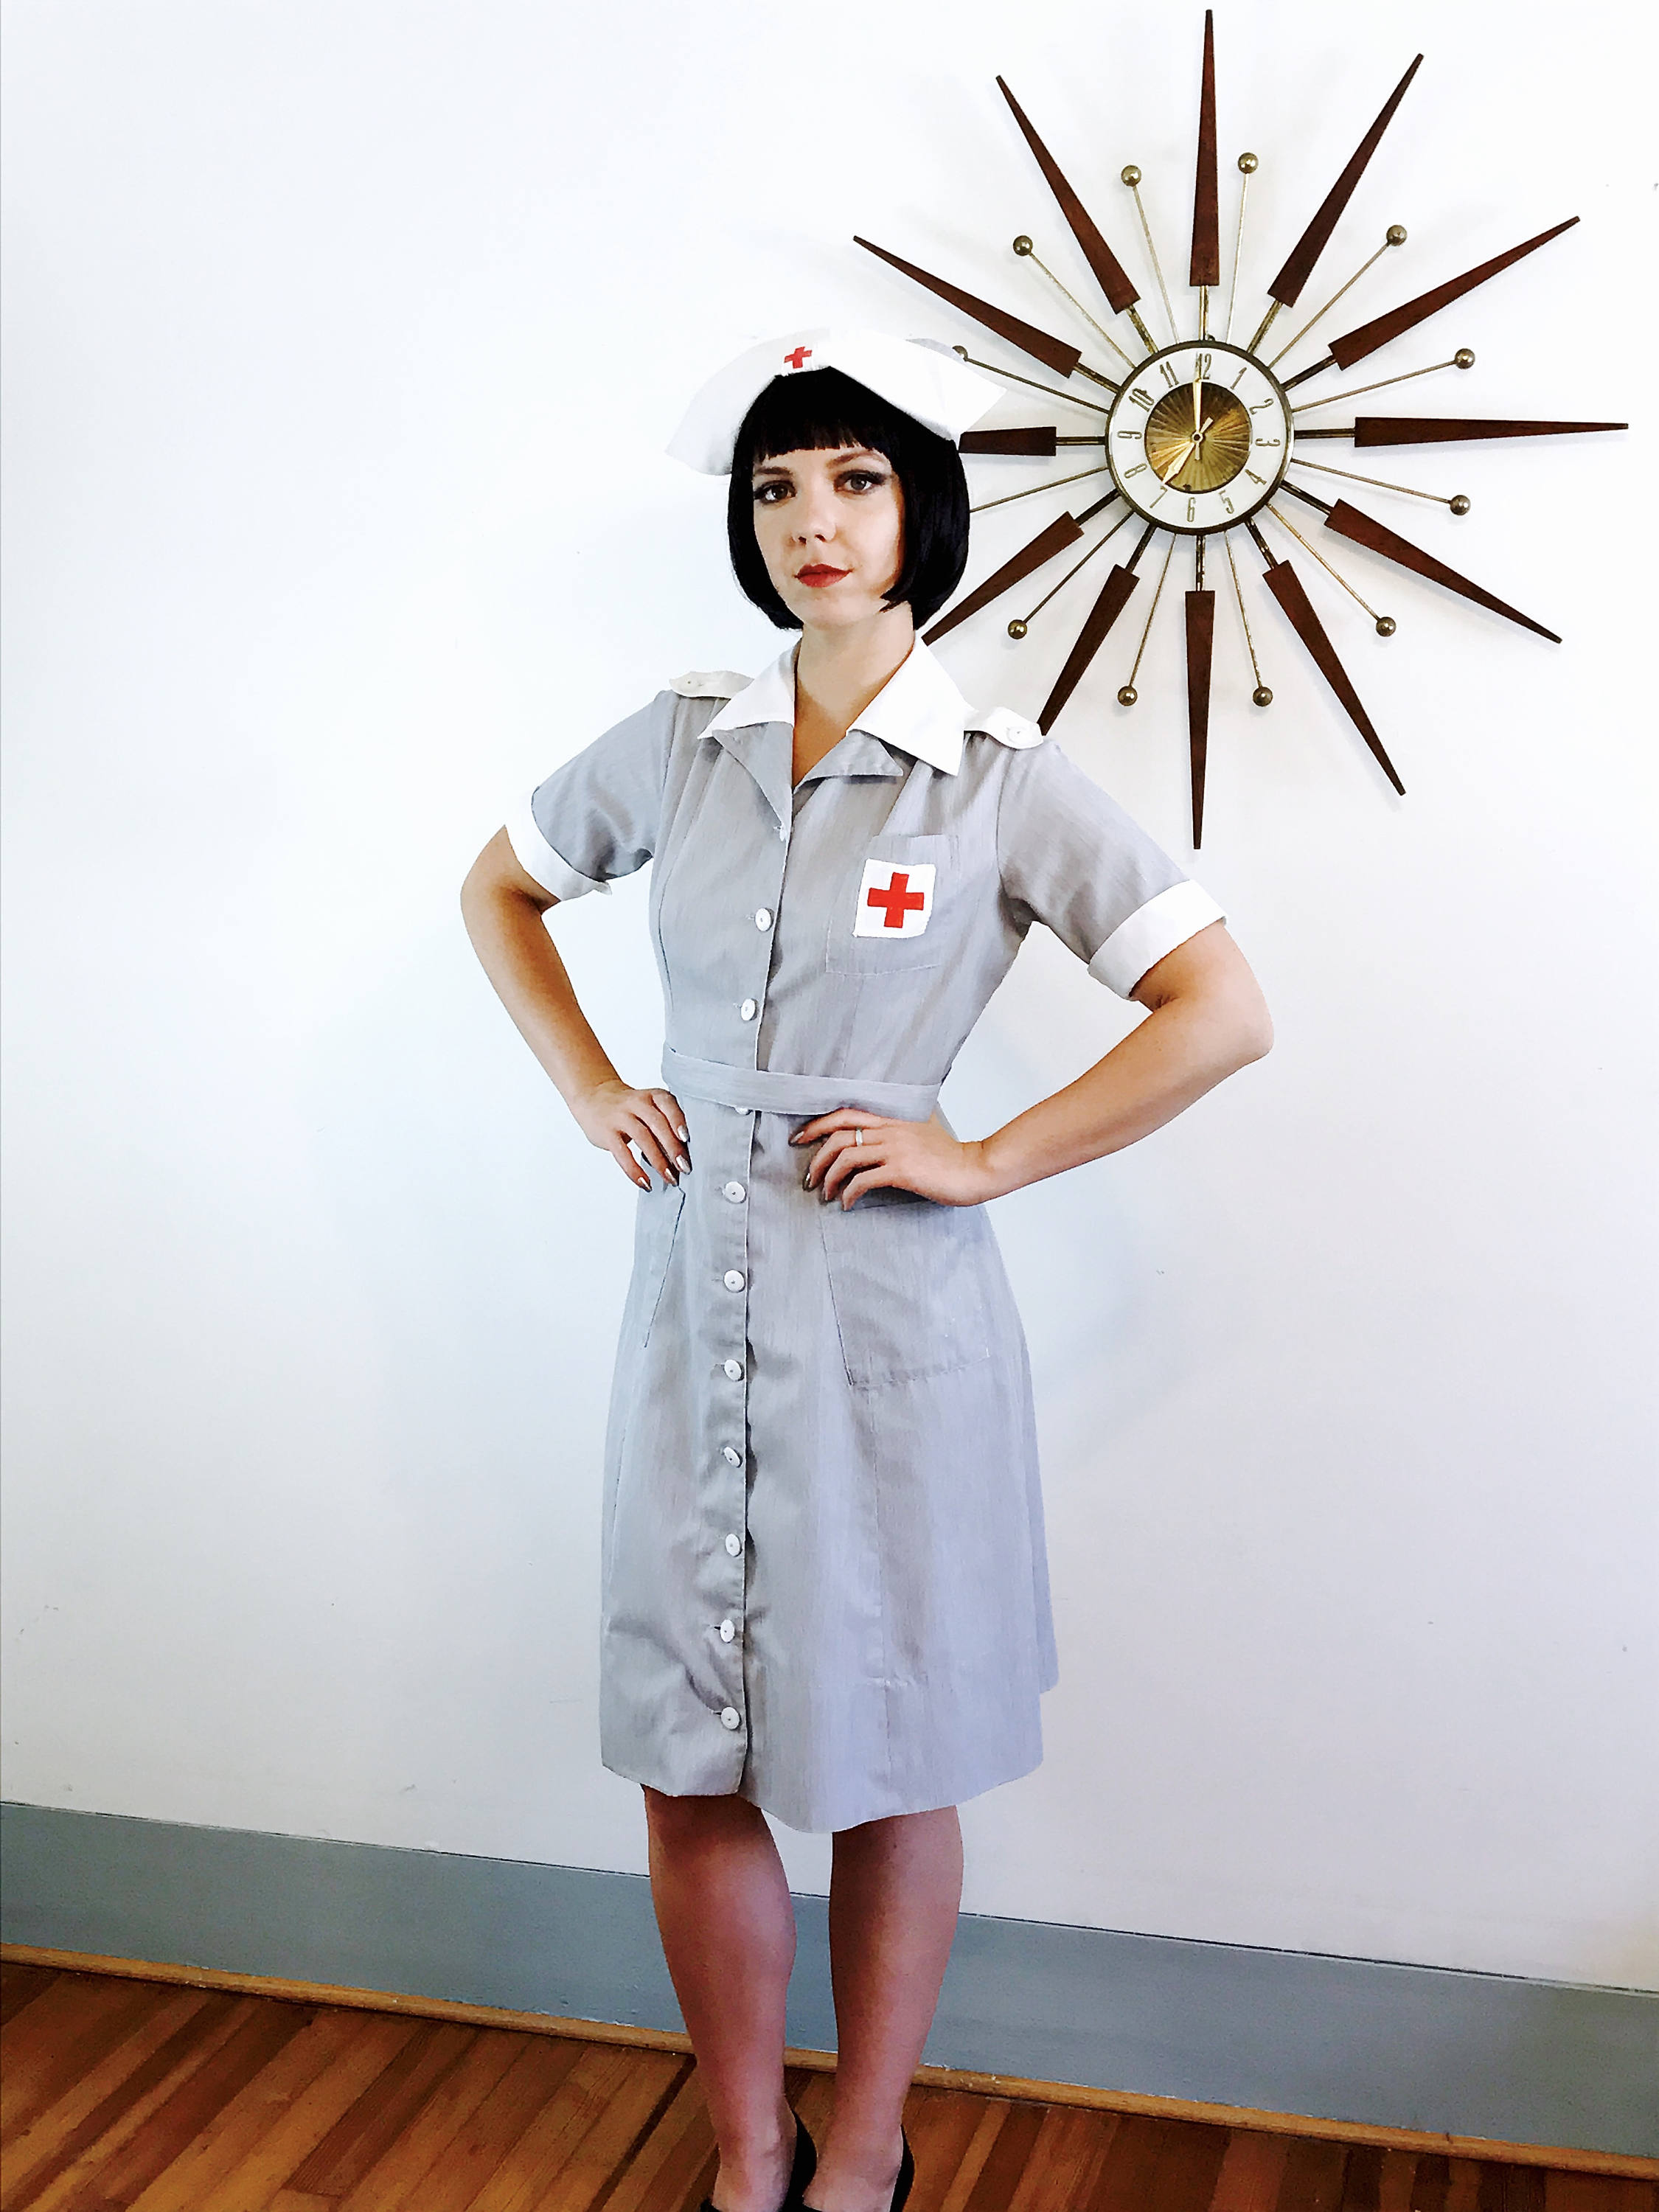 Négligence Concentration Objection ww2 nurse uniform for sale Mal ...